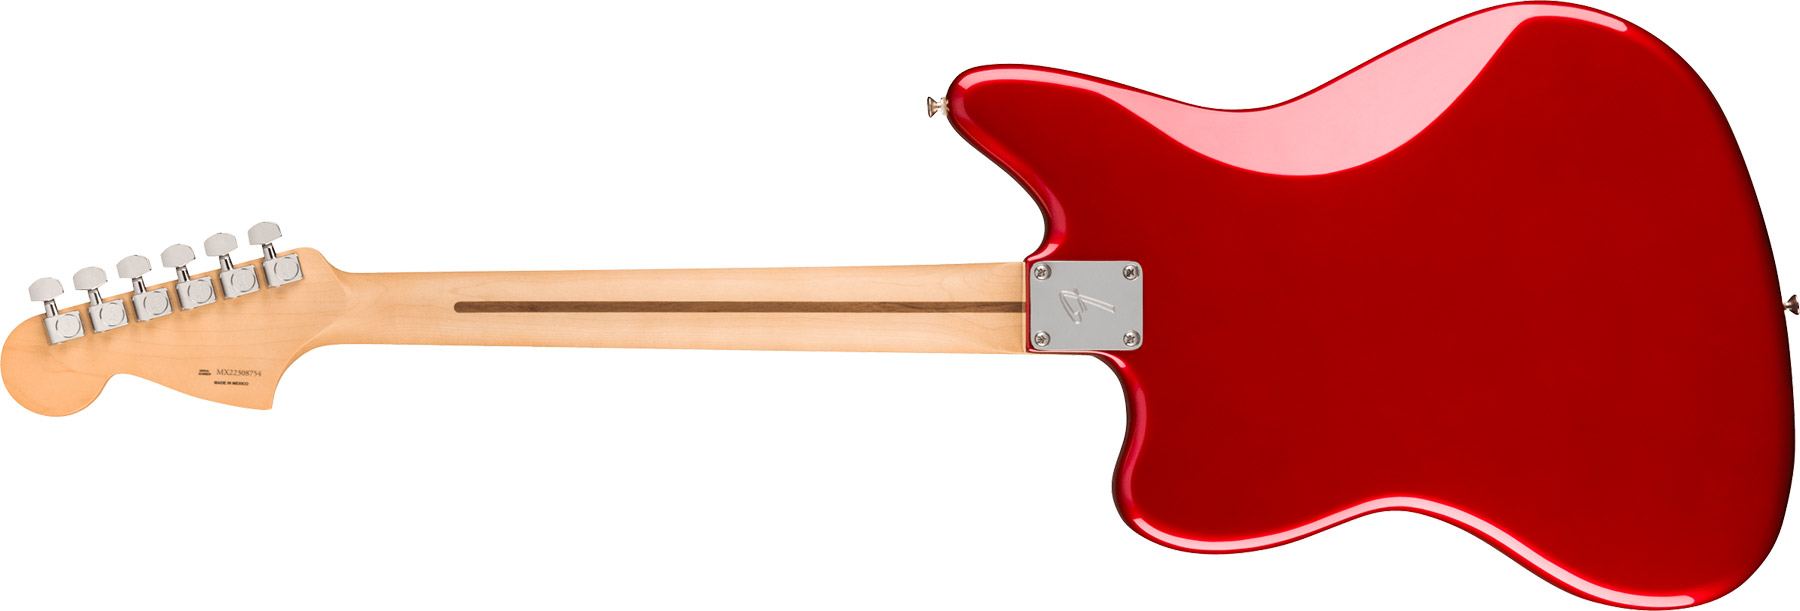 Fender Jaguar Player Mex 2023 Hs Trem Pf - Candy Apple Red - Guitarra electrica retro rock - Variation 1